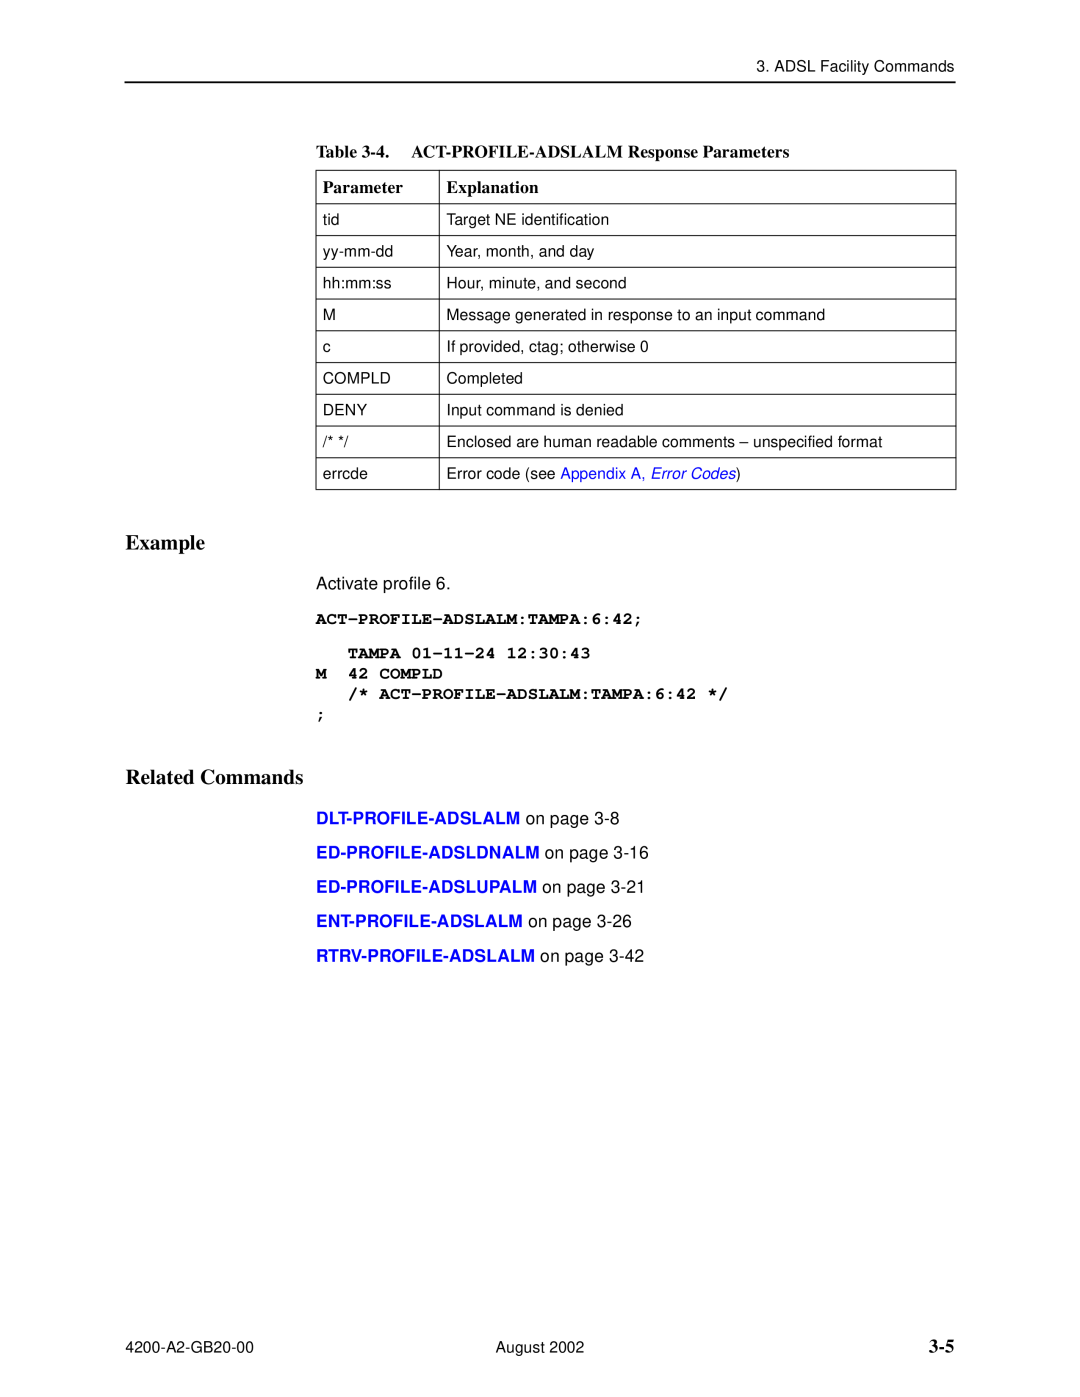 Paradyne 4200 4. ACT-PROFILE-ADSLALM Response Parameters, ACT-PROFILE-ADSLALMTAMPA642 TAMPA 01-11-24 M 42 COMPLD, Example 